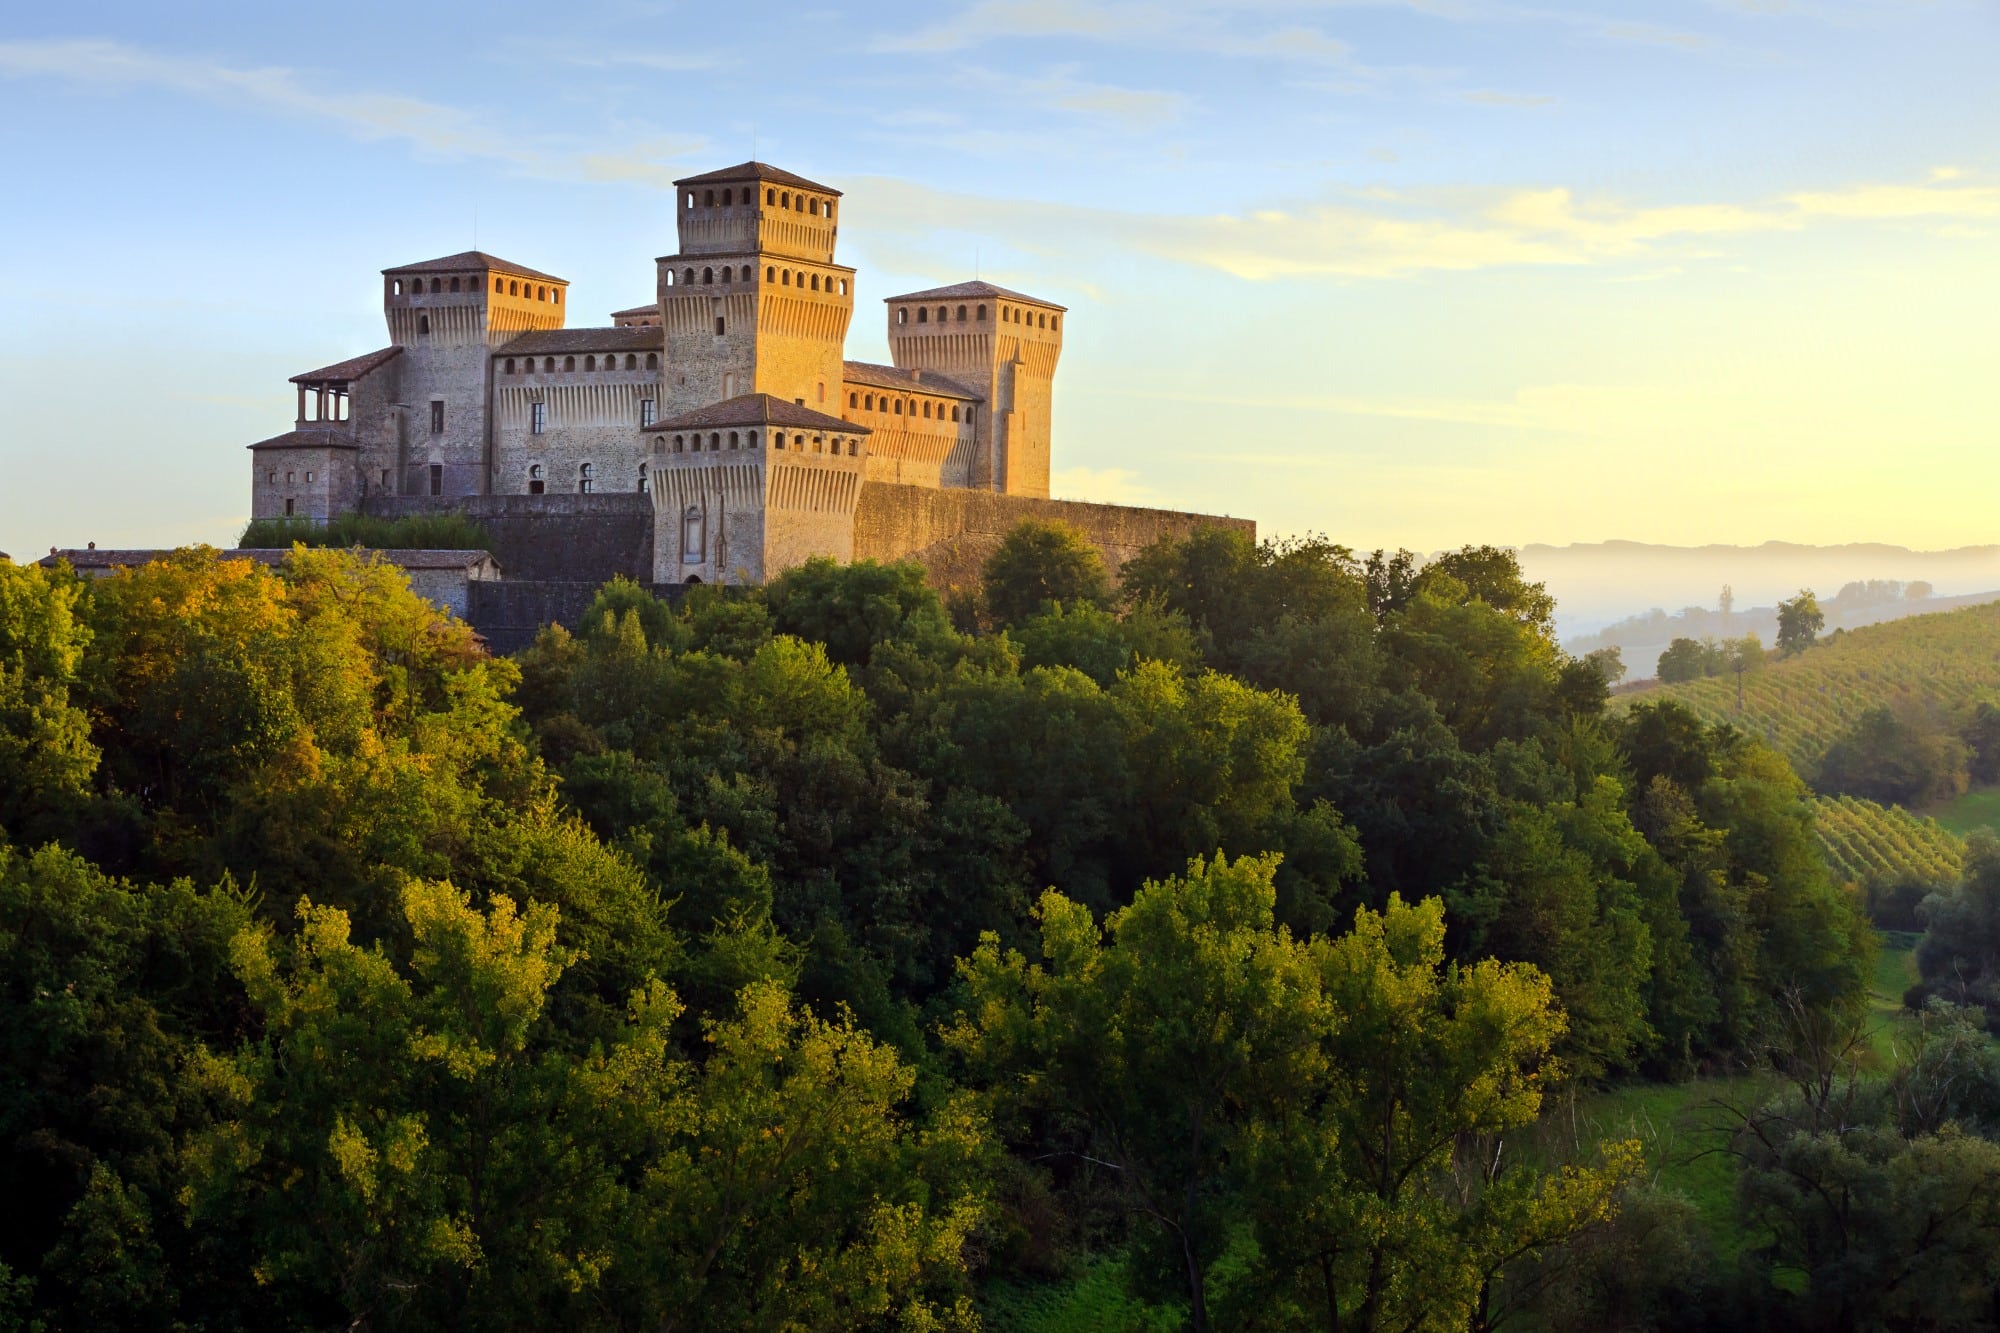 Afternoon light on Torrechiara Castle, Emilia-Romagna, Italy